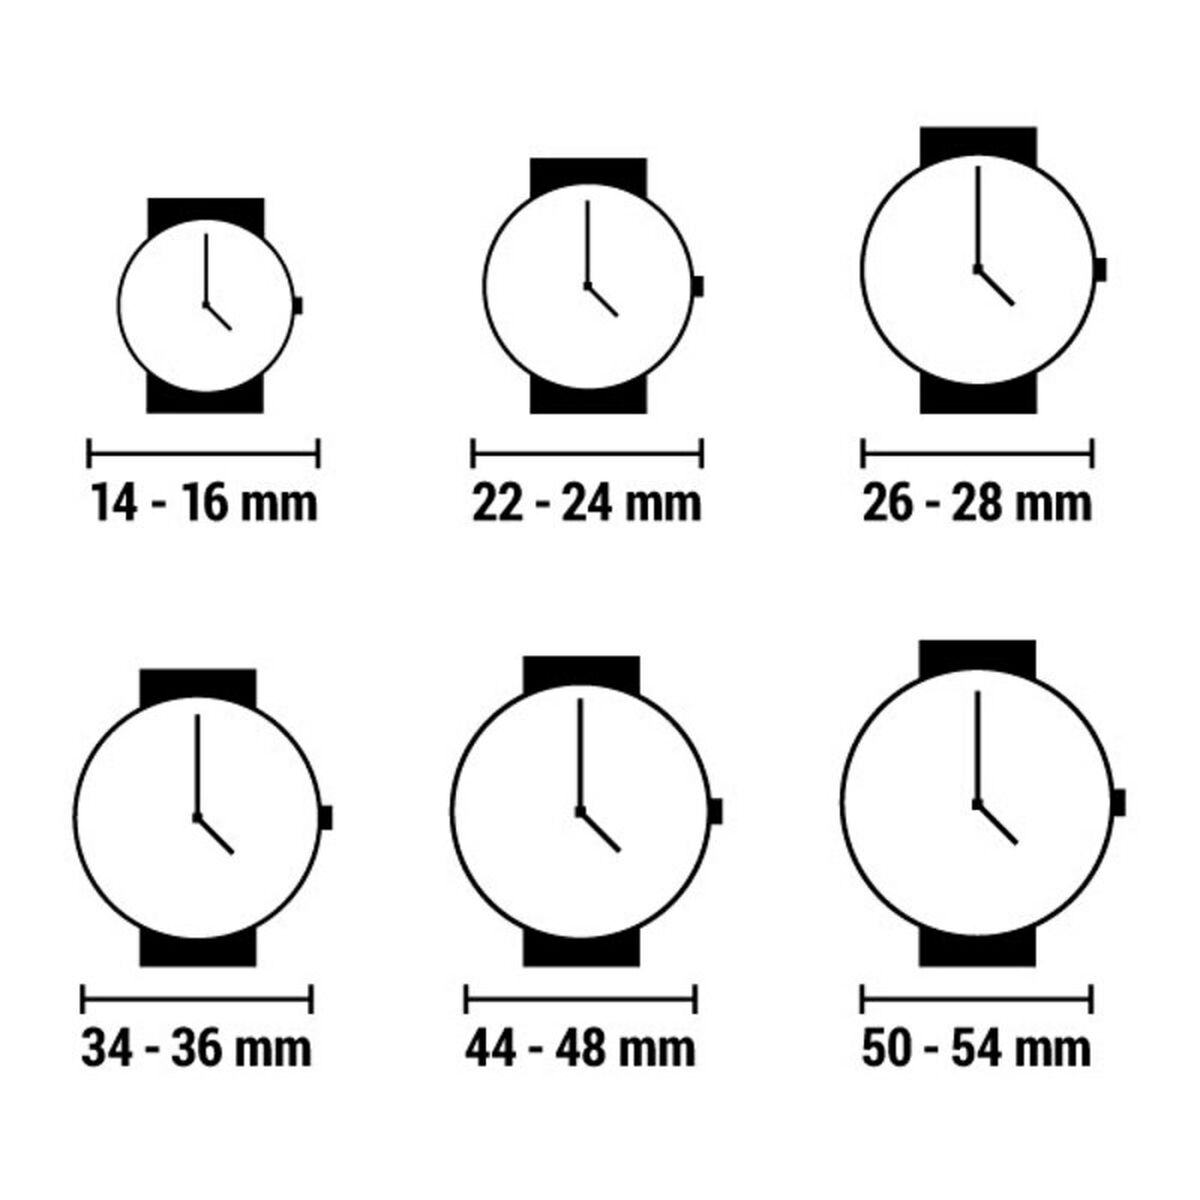 Horloge Heren Guess W0674G7 (Ø 45 mm)